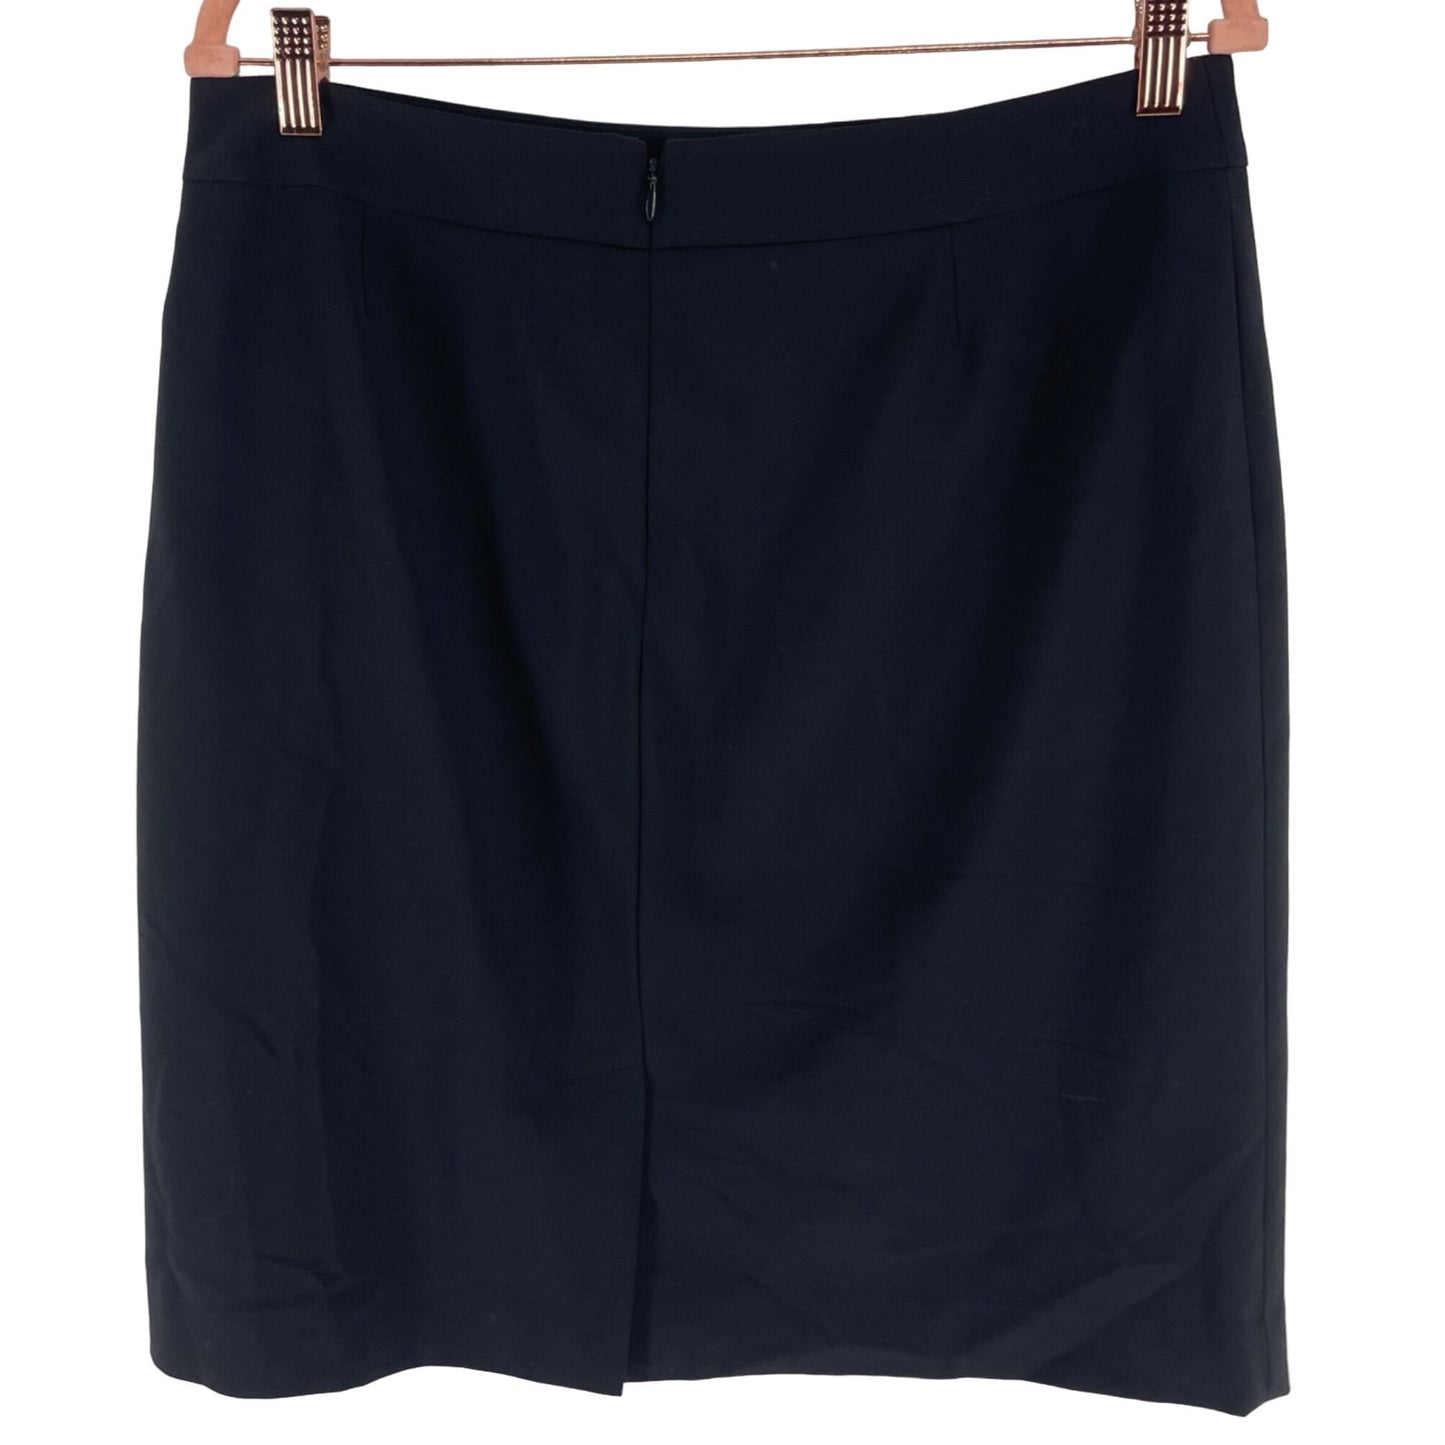 Talbots Women's Size 12P Black Wool Blend Business Skirt